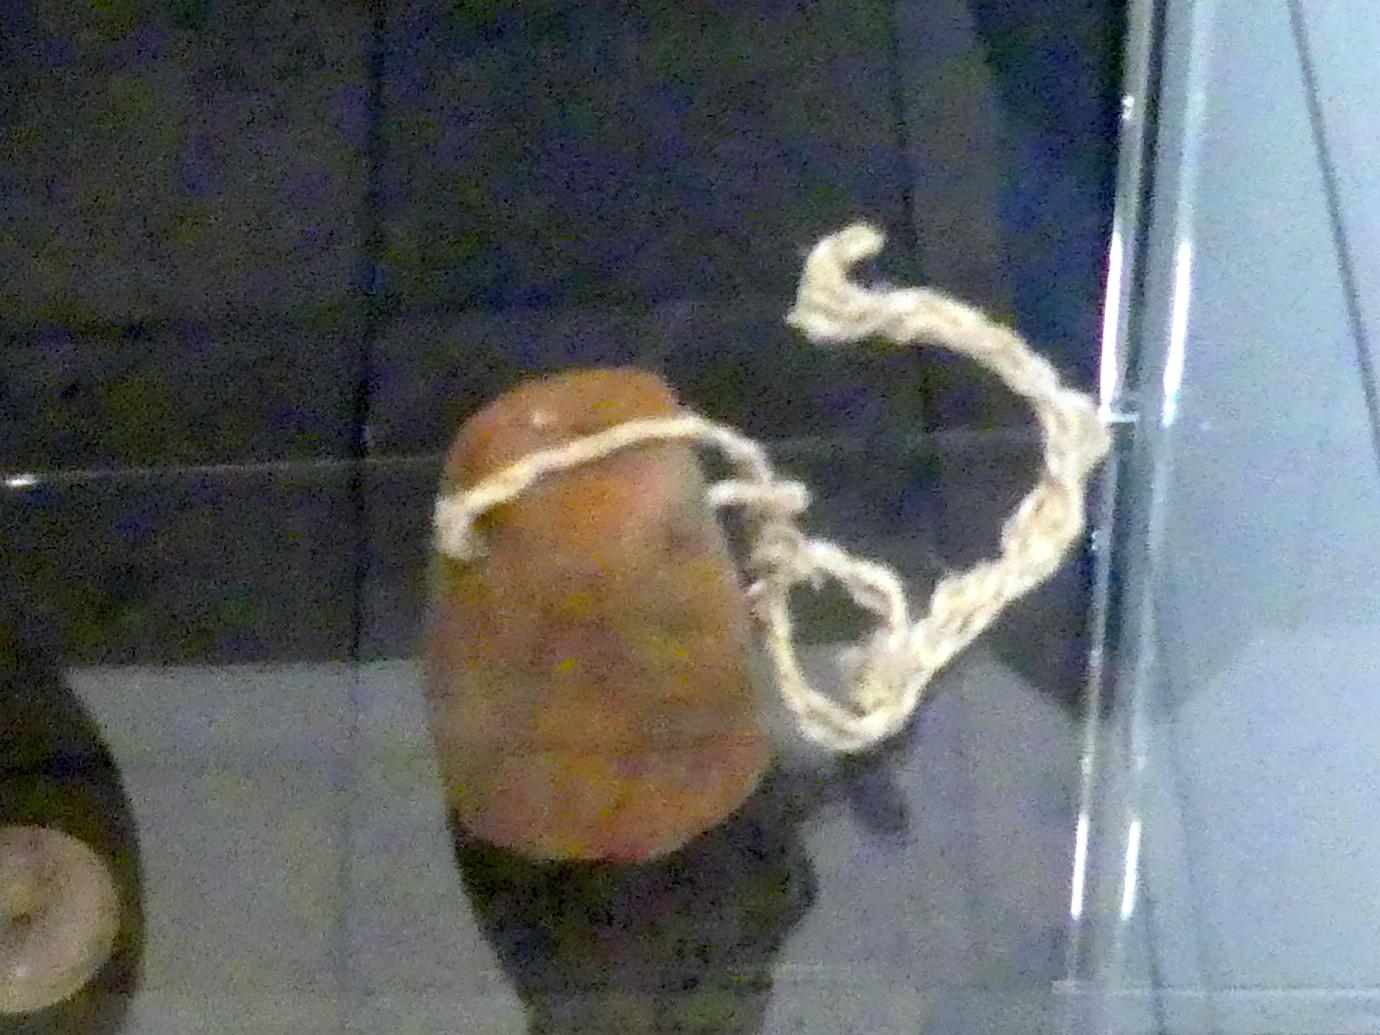 Webgewicht, Spätlatènezeit D, 700 - 100 v. Chr.